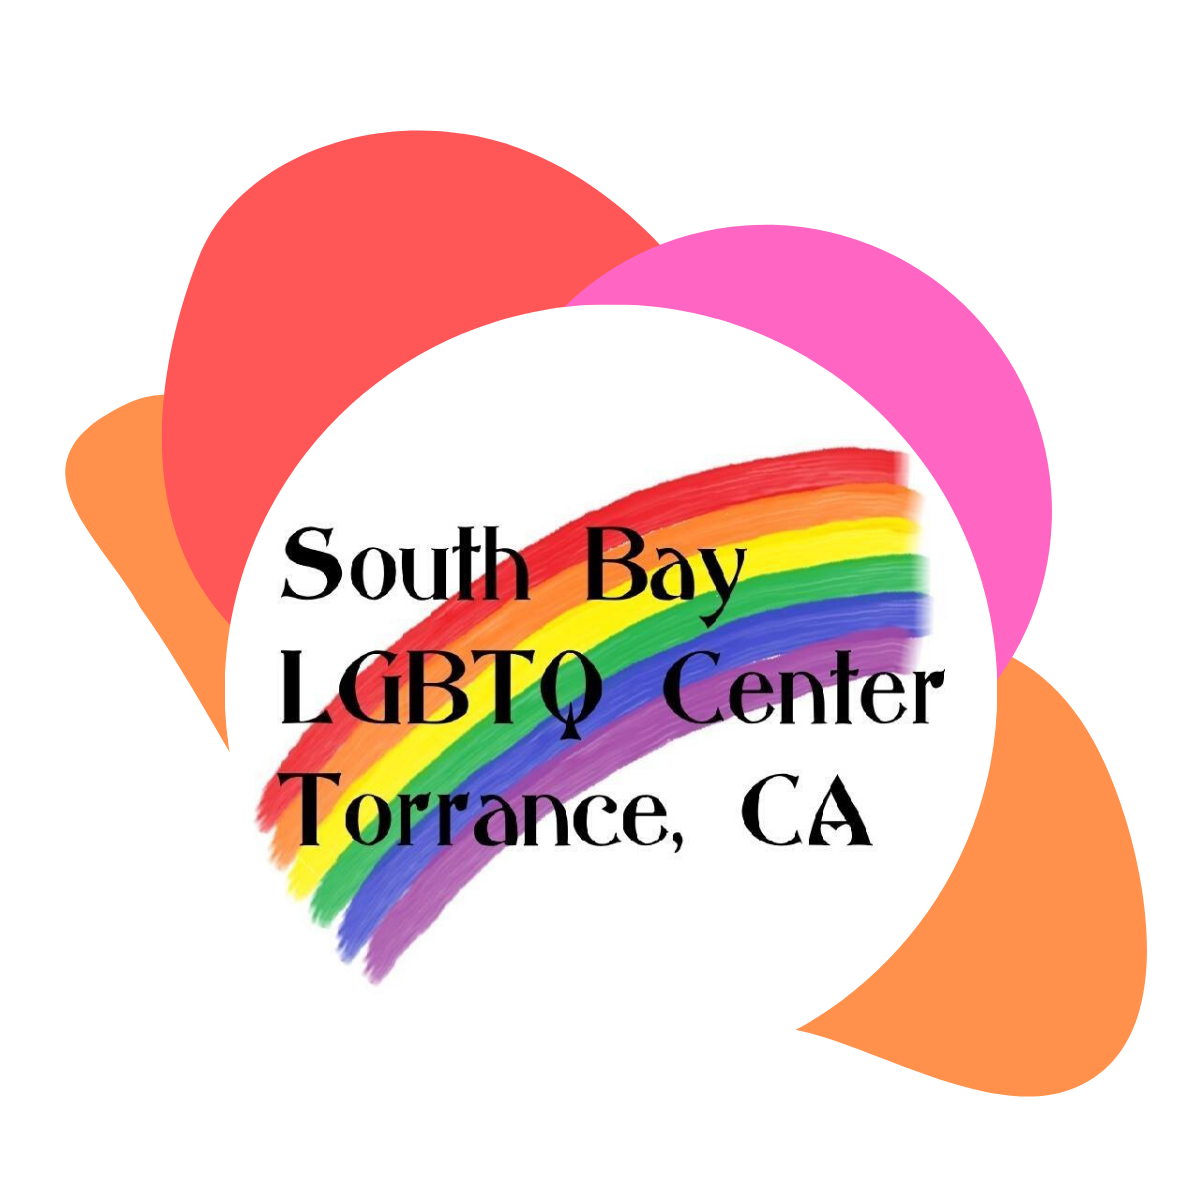 LGBTQ Organization in San Jose California - South Bay LGBTQ Center